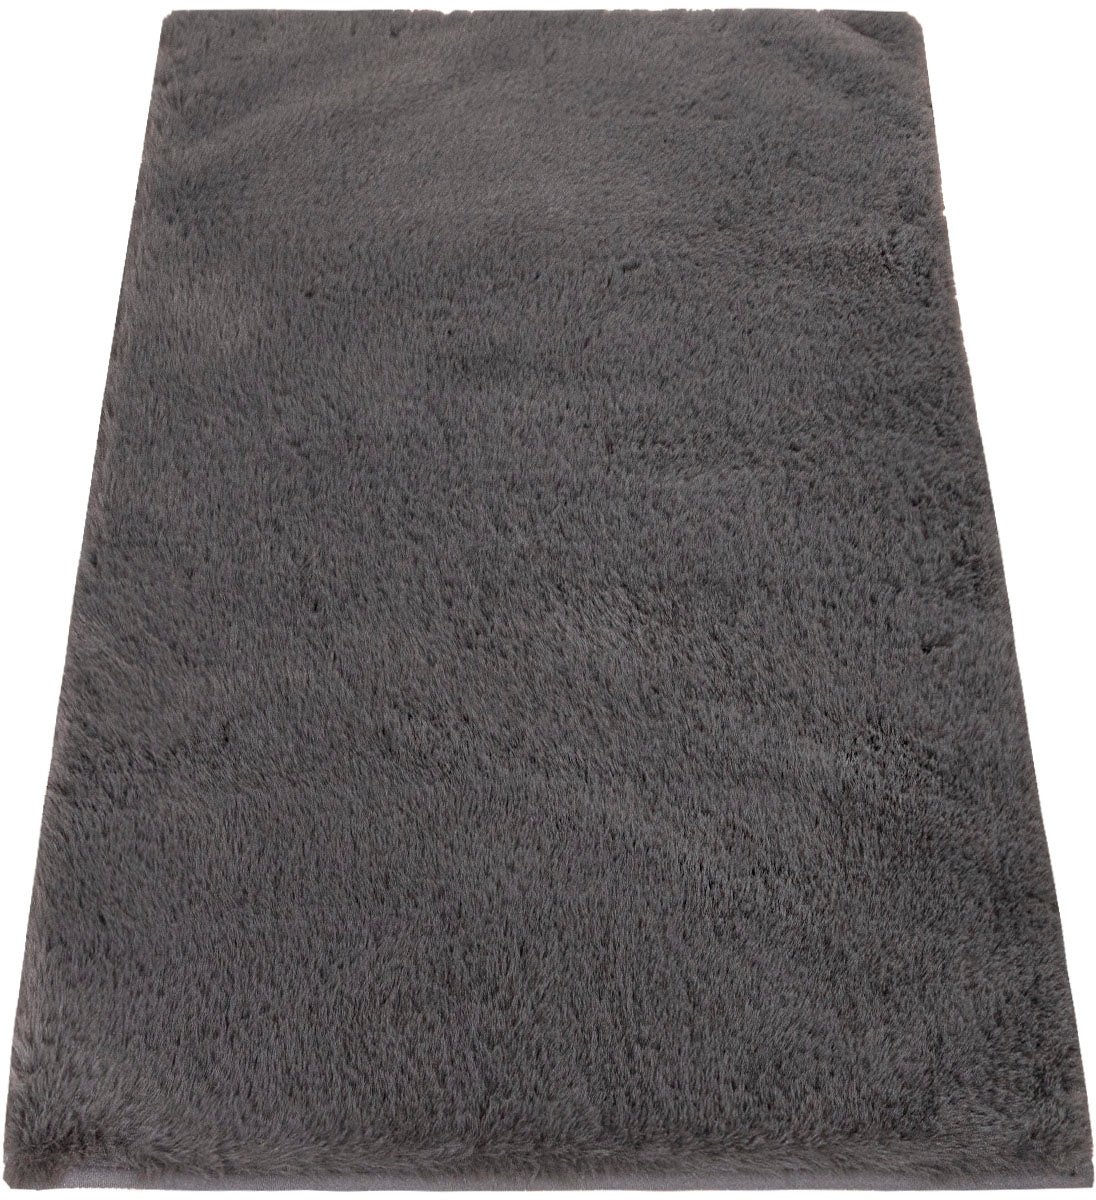 Paco Home Badematte »Comfy 340«, Höhe 25 mm, rutschhemmend beschichtet, fußbodenheizungsgeeignet, Badteppich, Soft-Touch-Oberfläche, besonders weich & flauschig